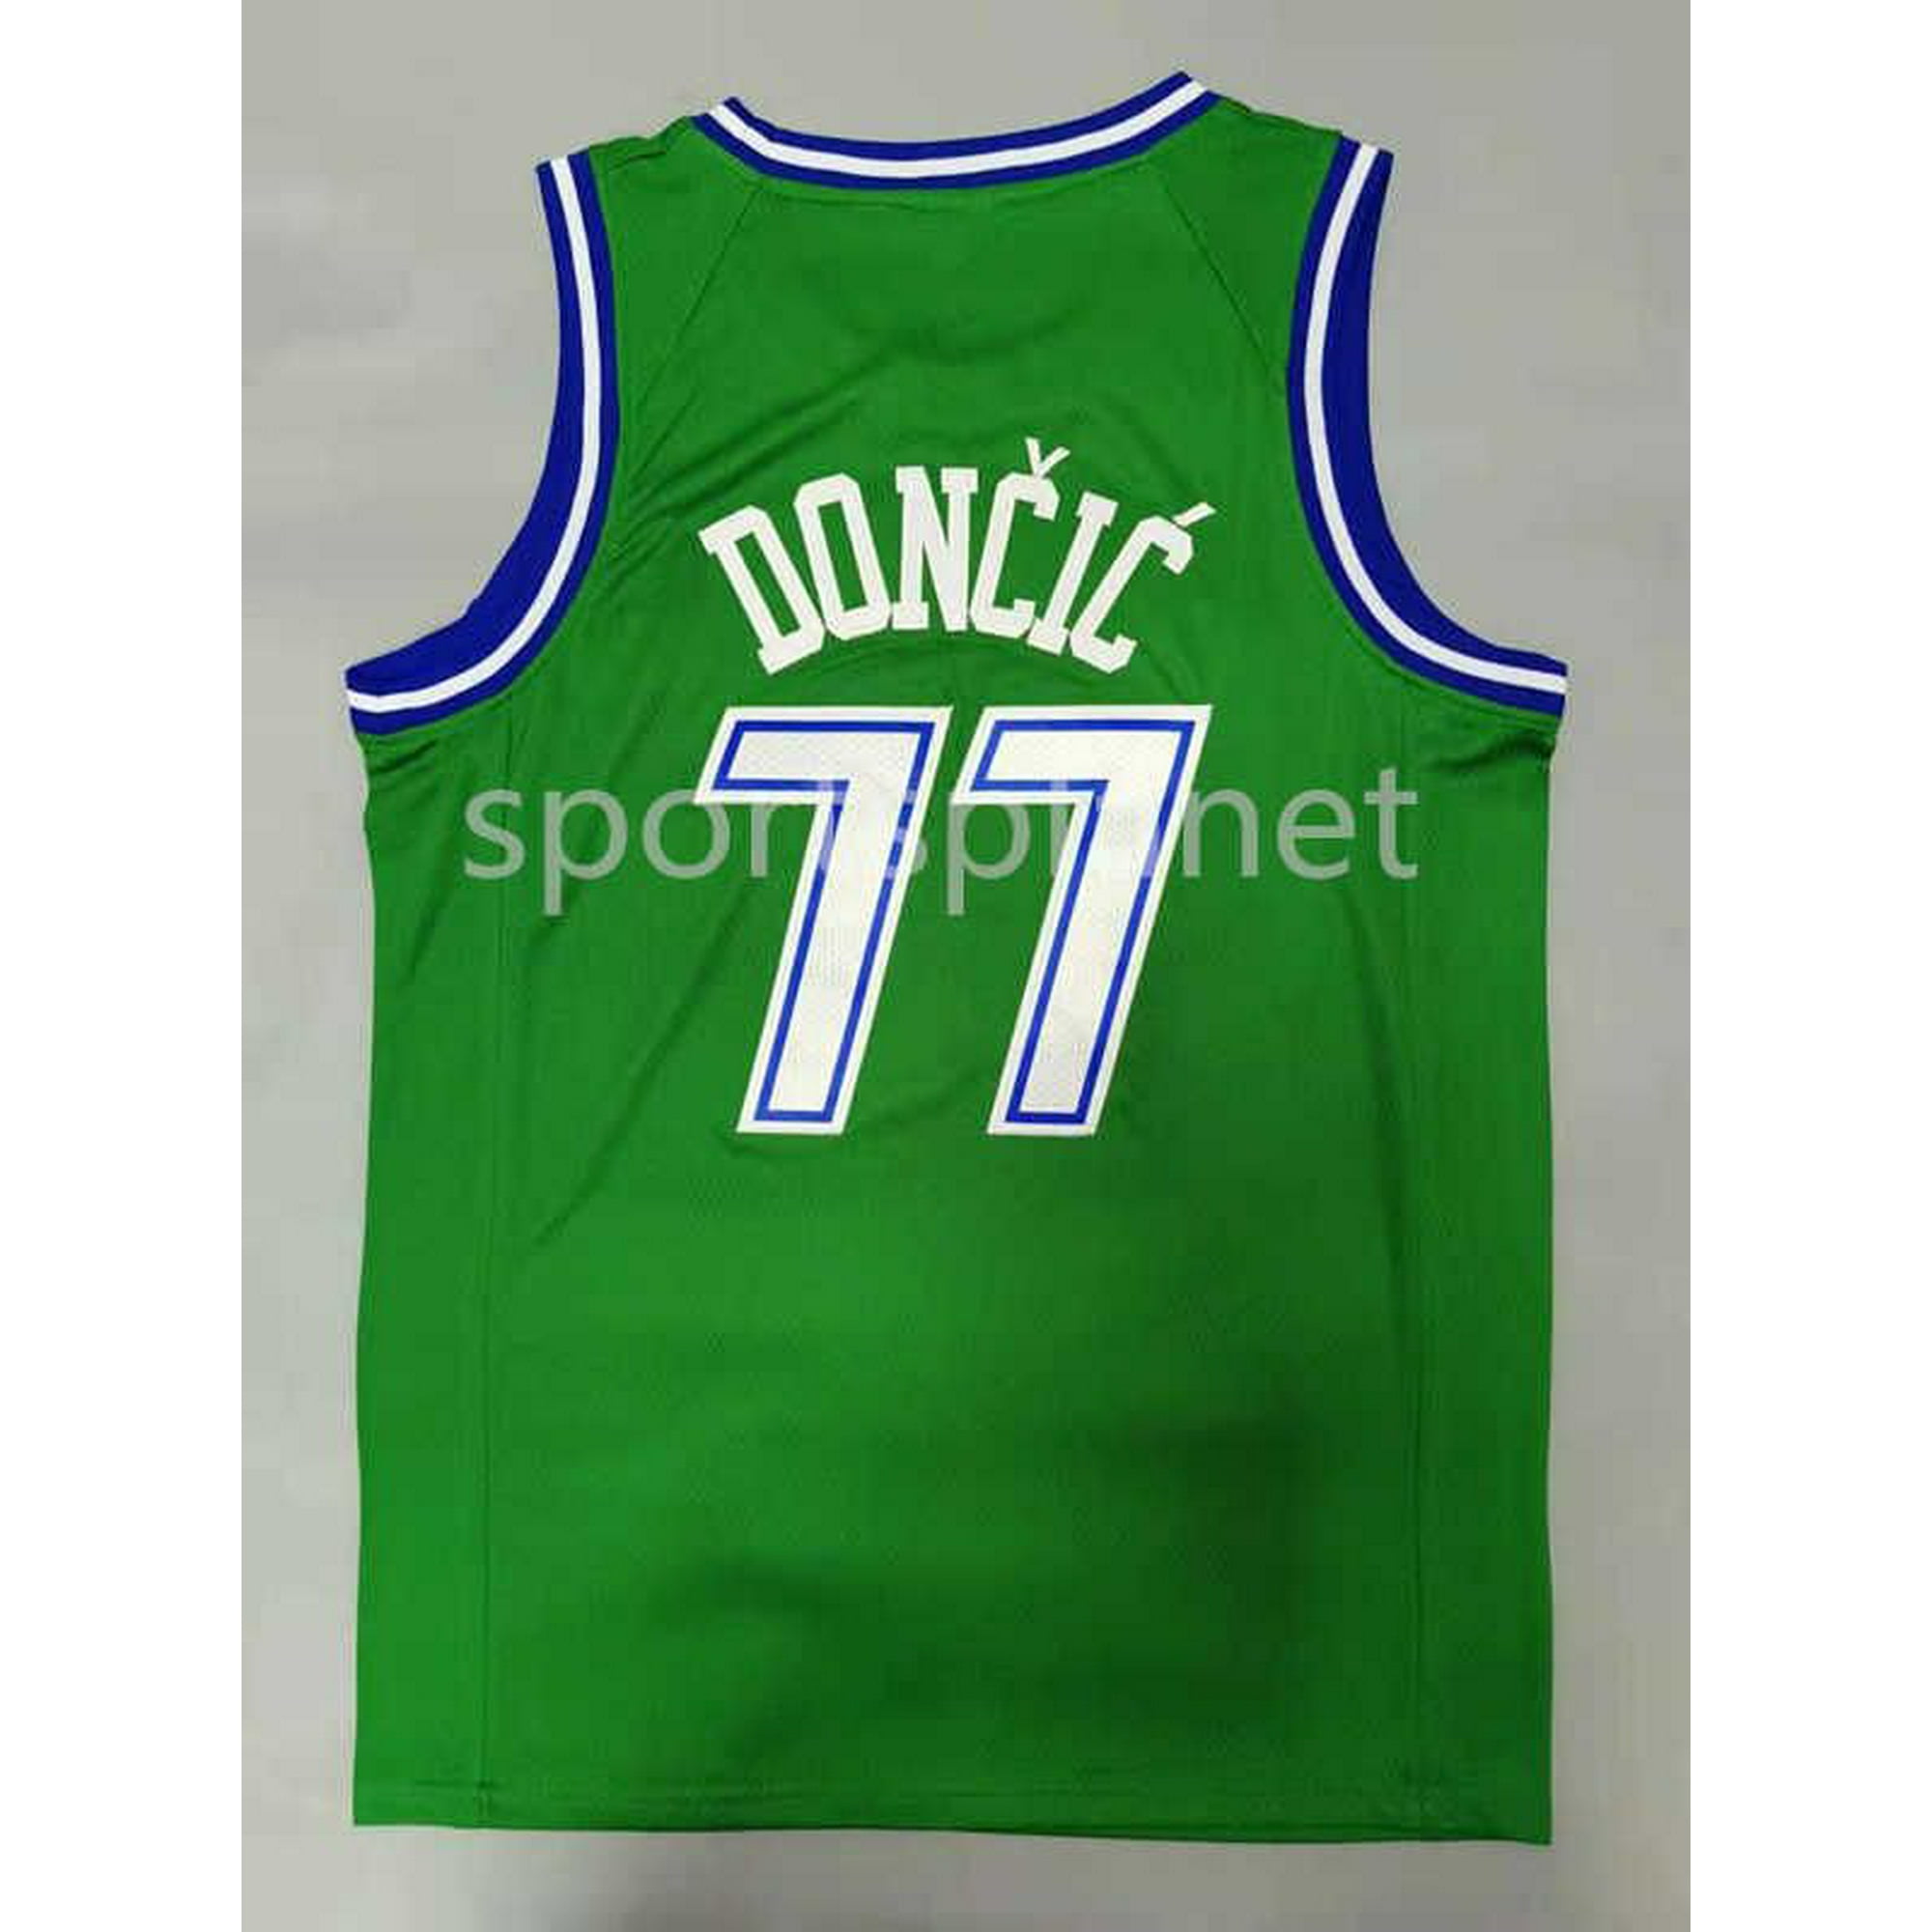 NBA_ Jersey Fashion version''nba''75th city Luka Vintage 77 Doncic Jersey  Mens Throwback Dirk 41 Nowitzki kristaps 6 Porzingis Embroidery Shirts 